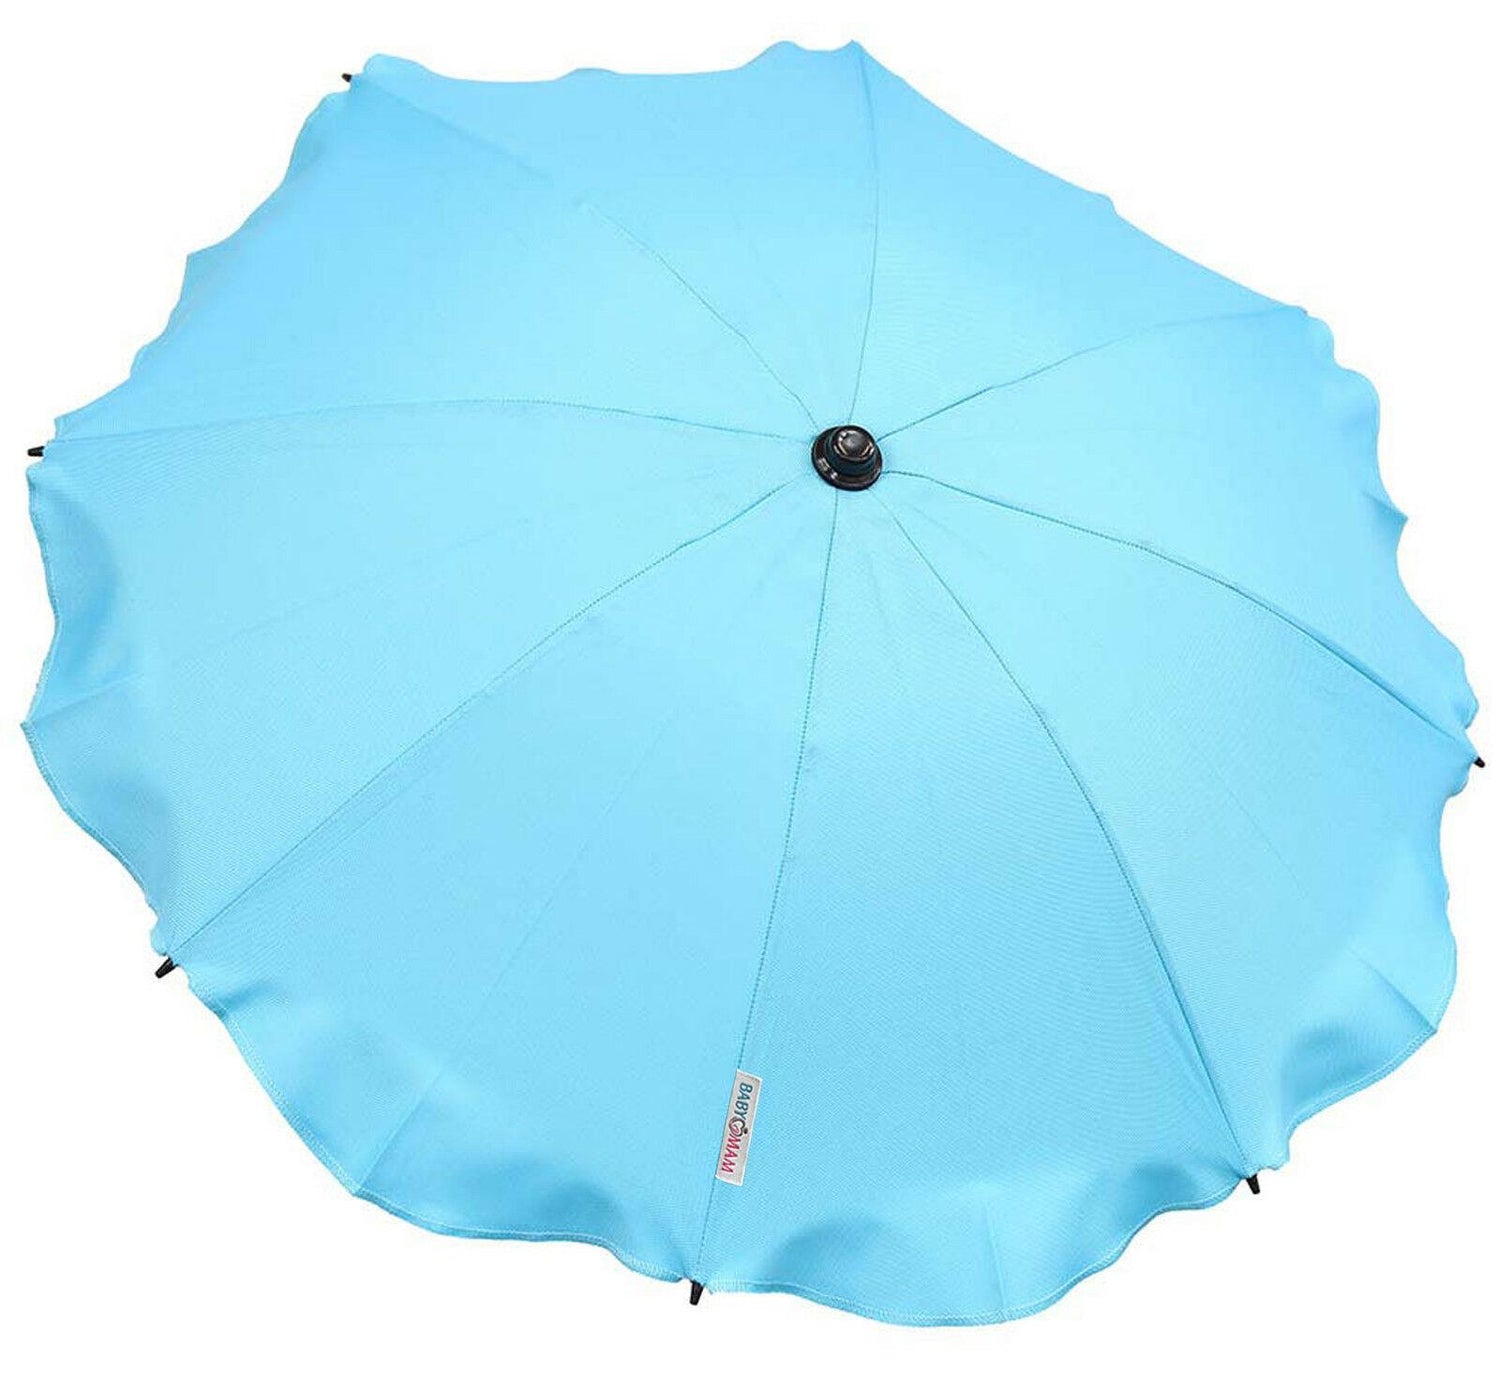 Baby Parasol Universal Sun Umbrella Pram Stroller Canopy Protect From Sun Rain Sky Blue